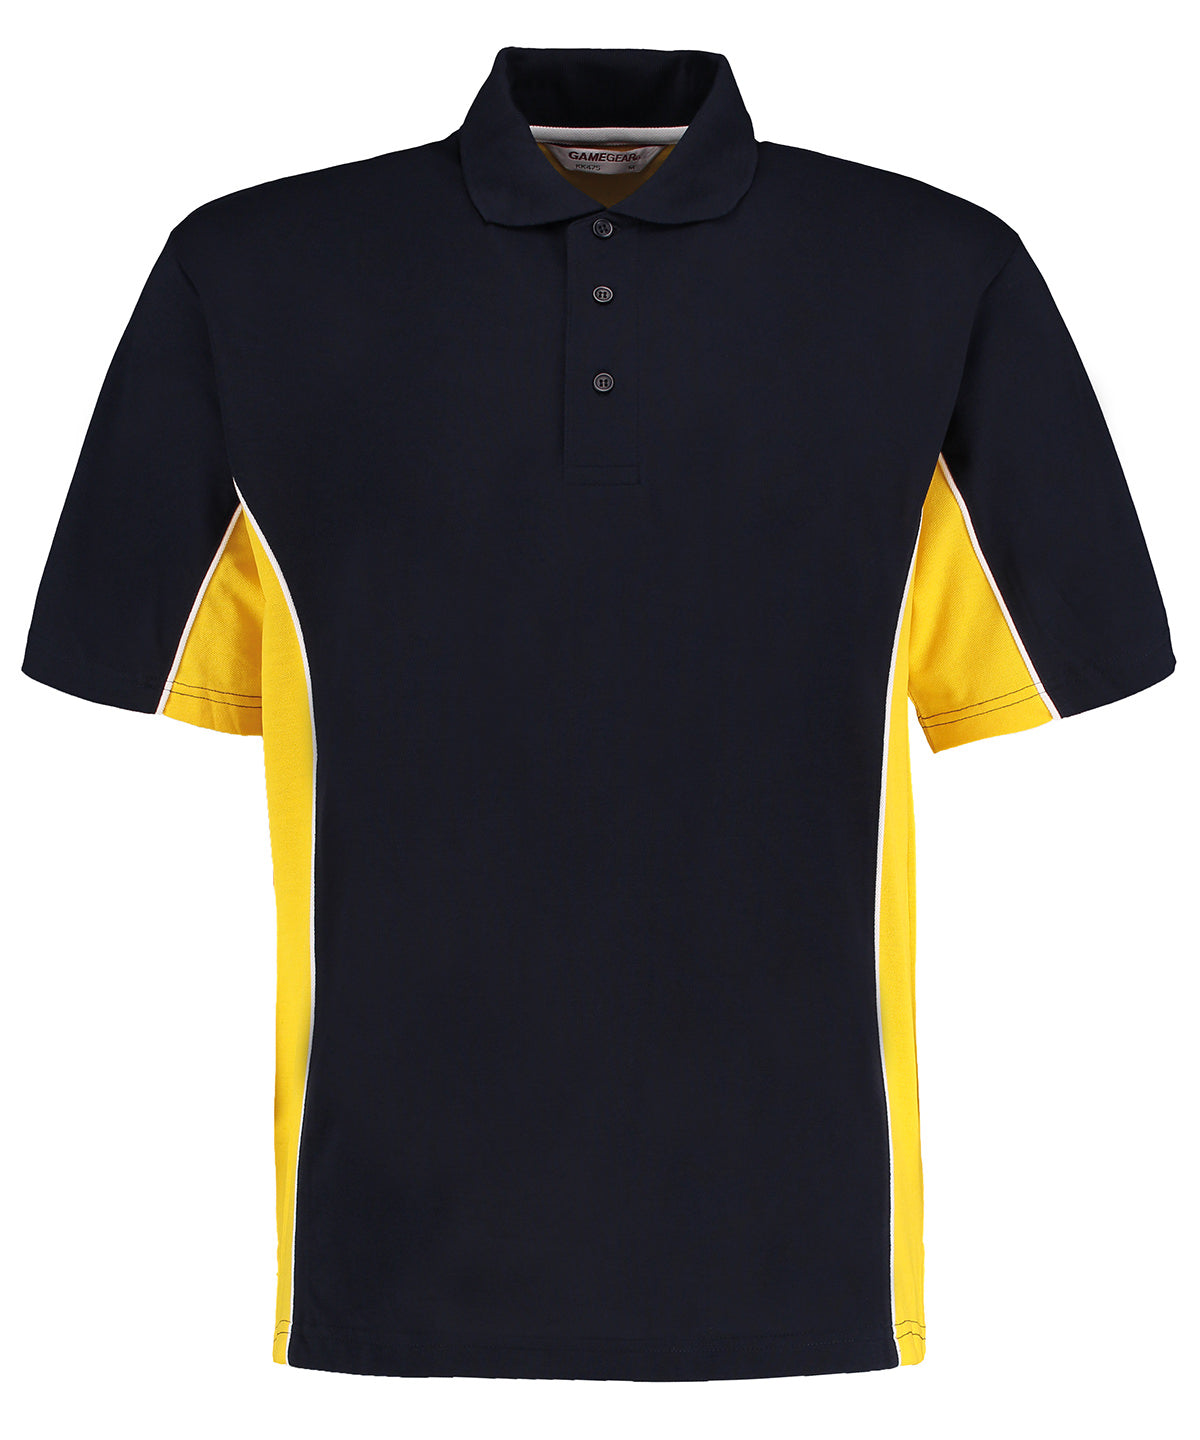 Personalised Polo Shirts - Black Kustom Kit Track polo (classic fit)